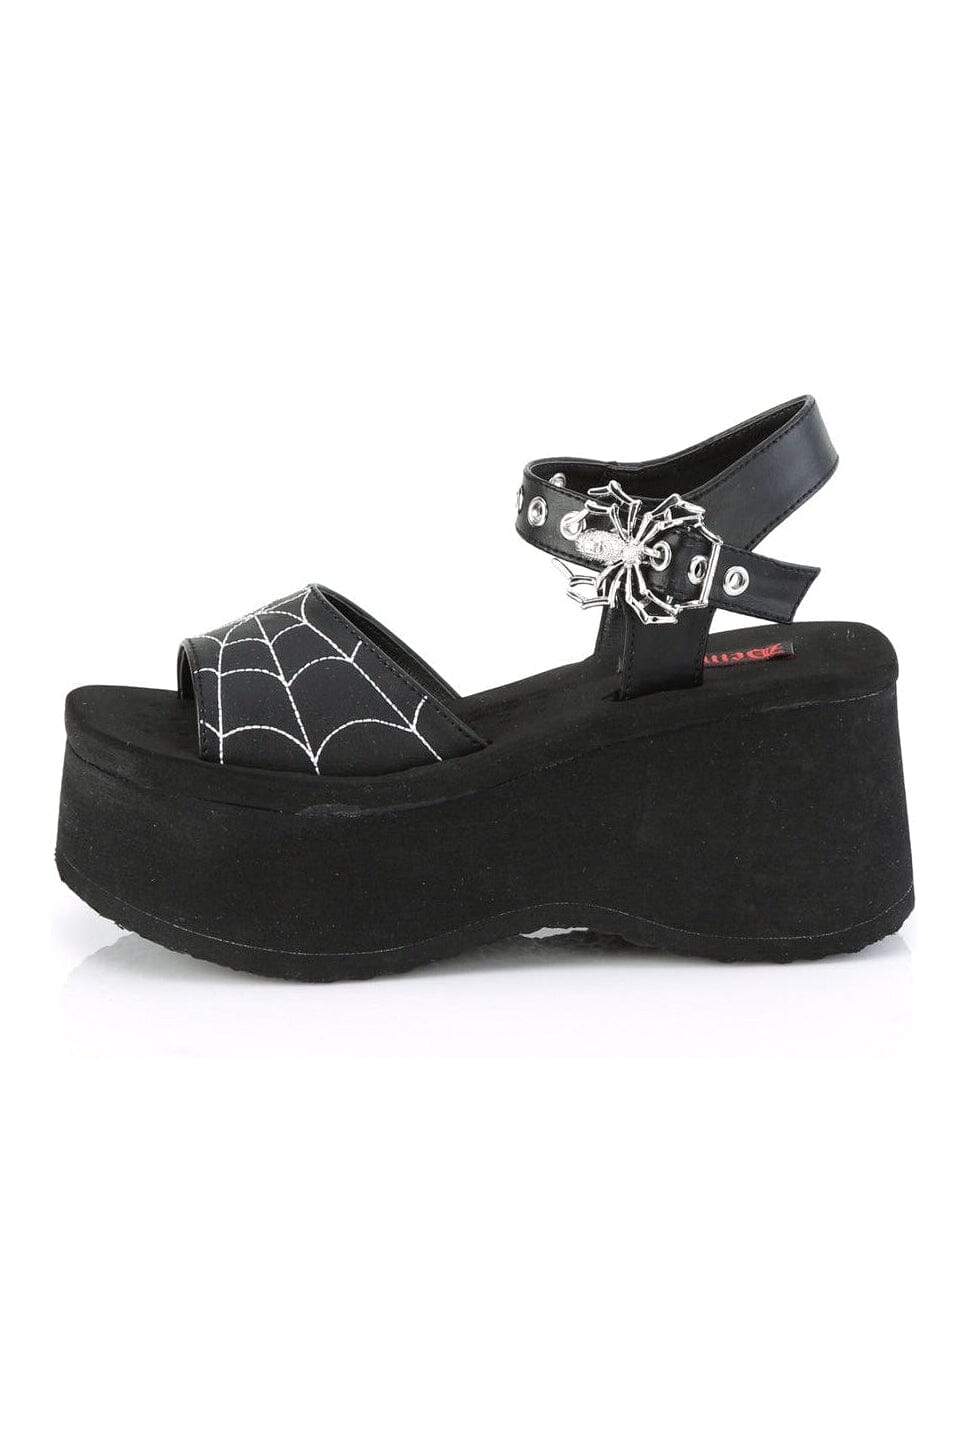 FUNN-10 Black Vegan Leather Sandal-Sandals-Demonia-SEXYSHOES.COM